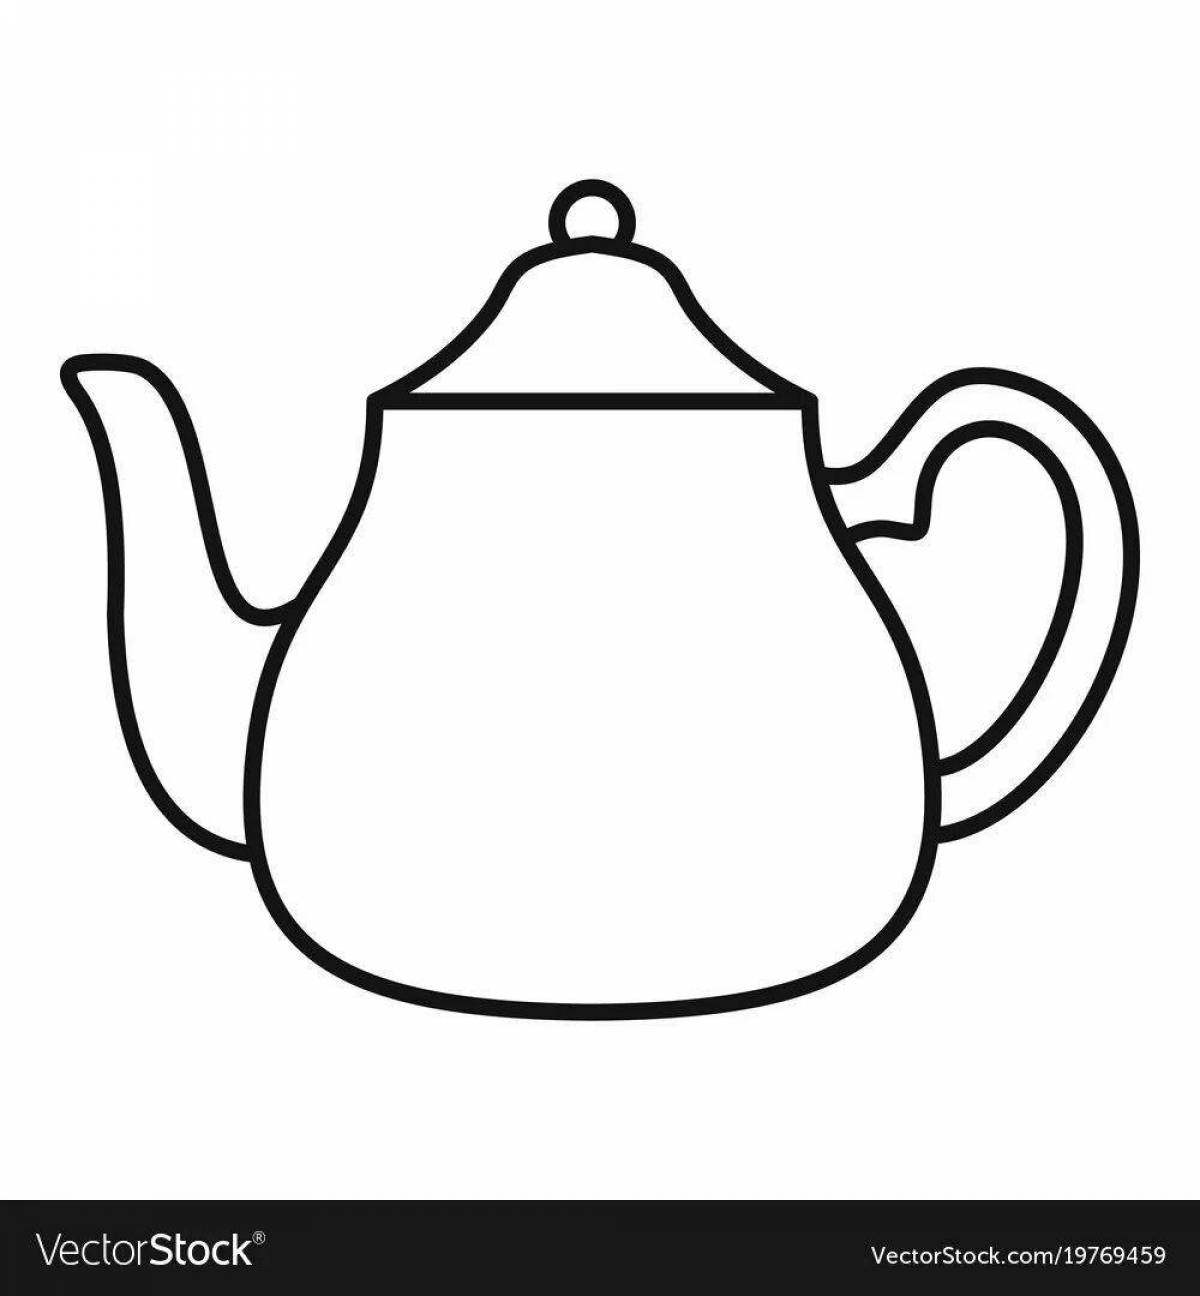 Wonderful teapot coloring book for kids